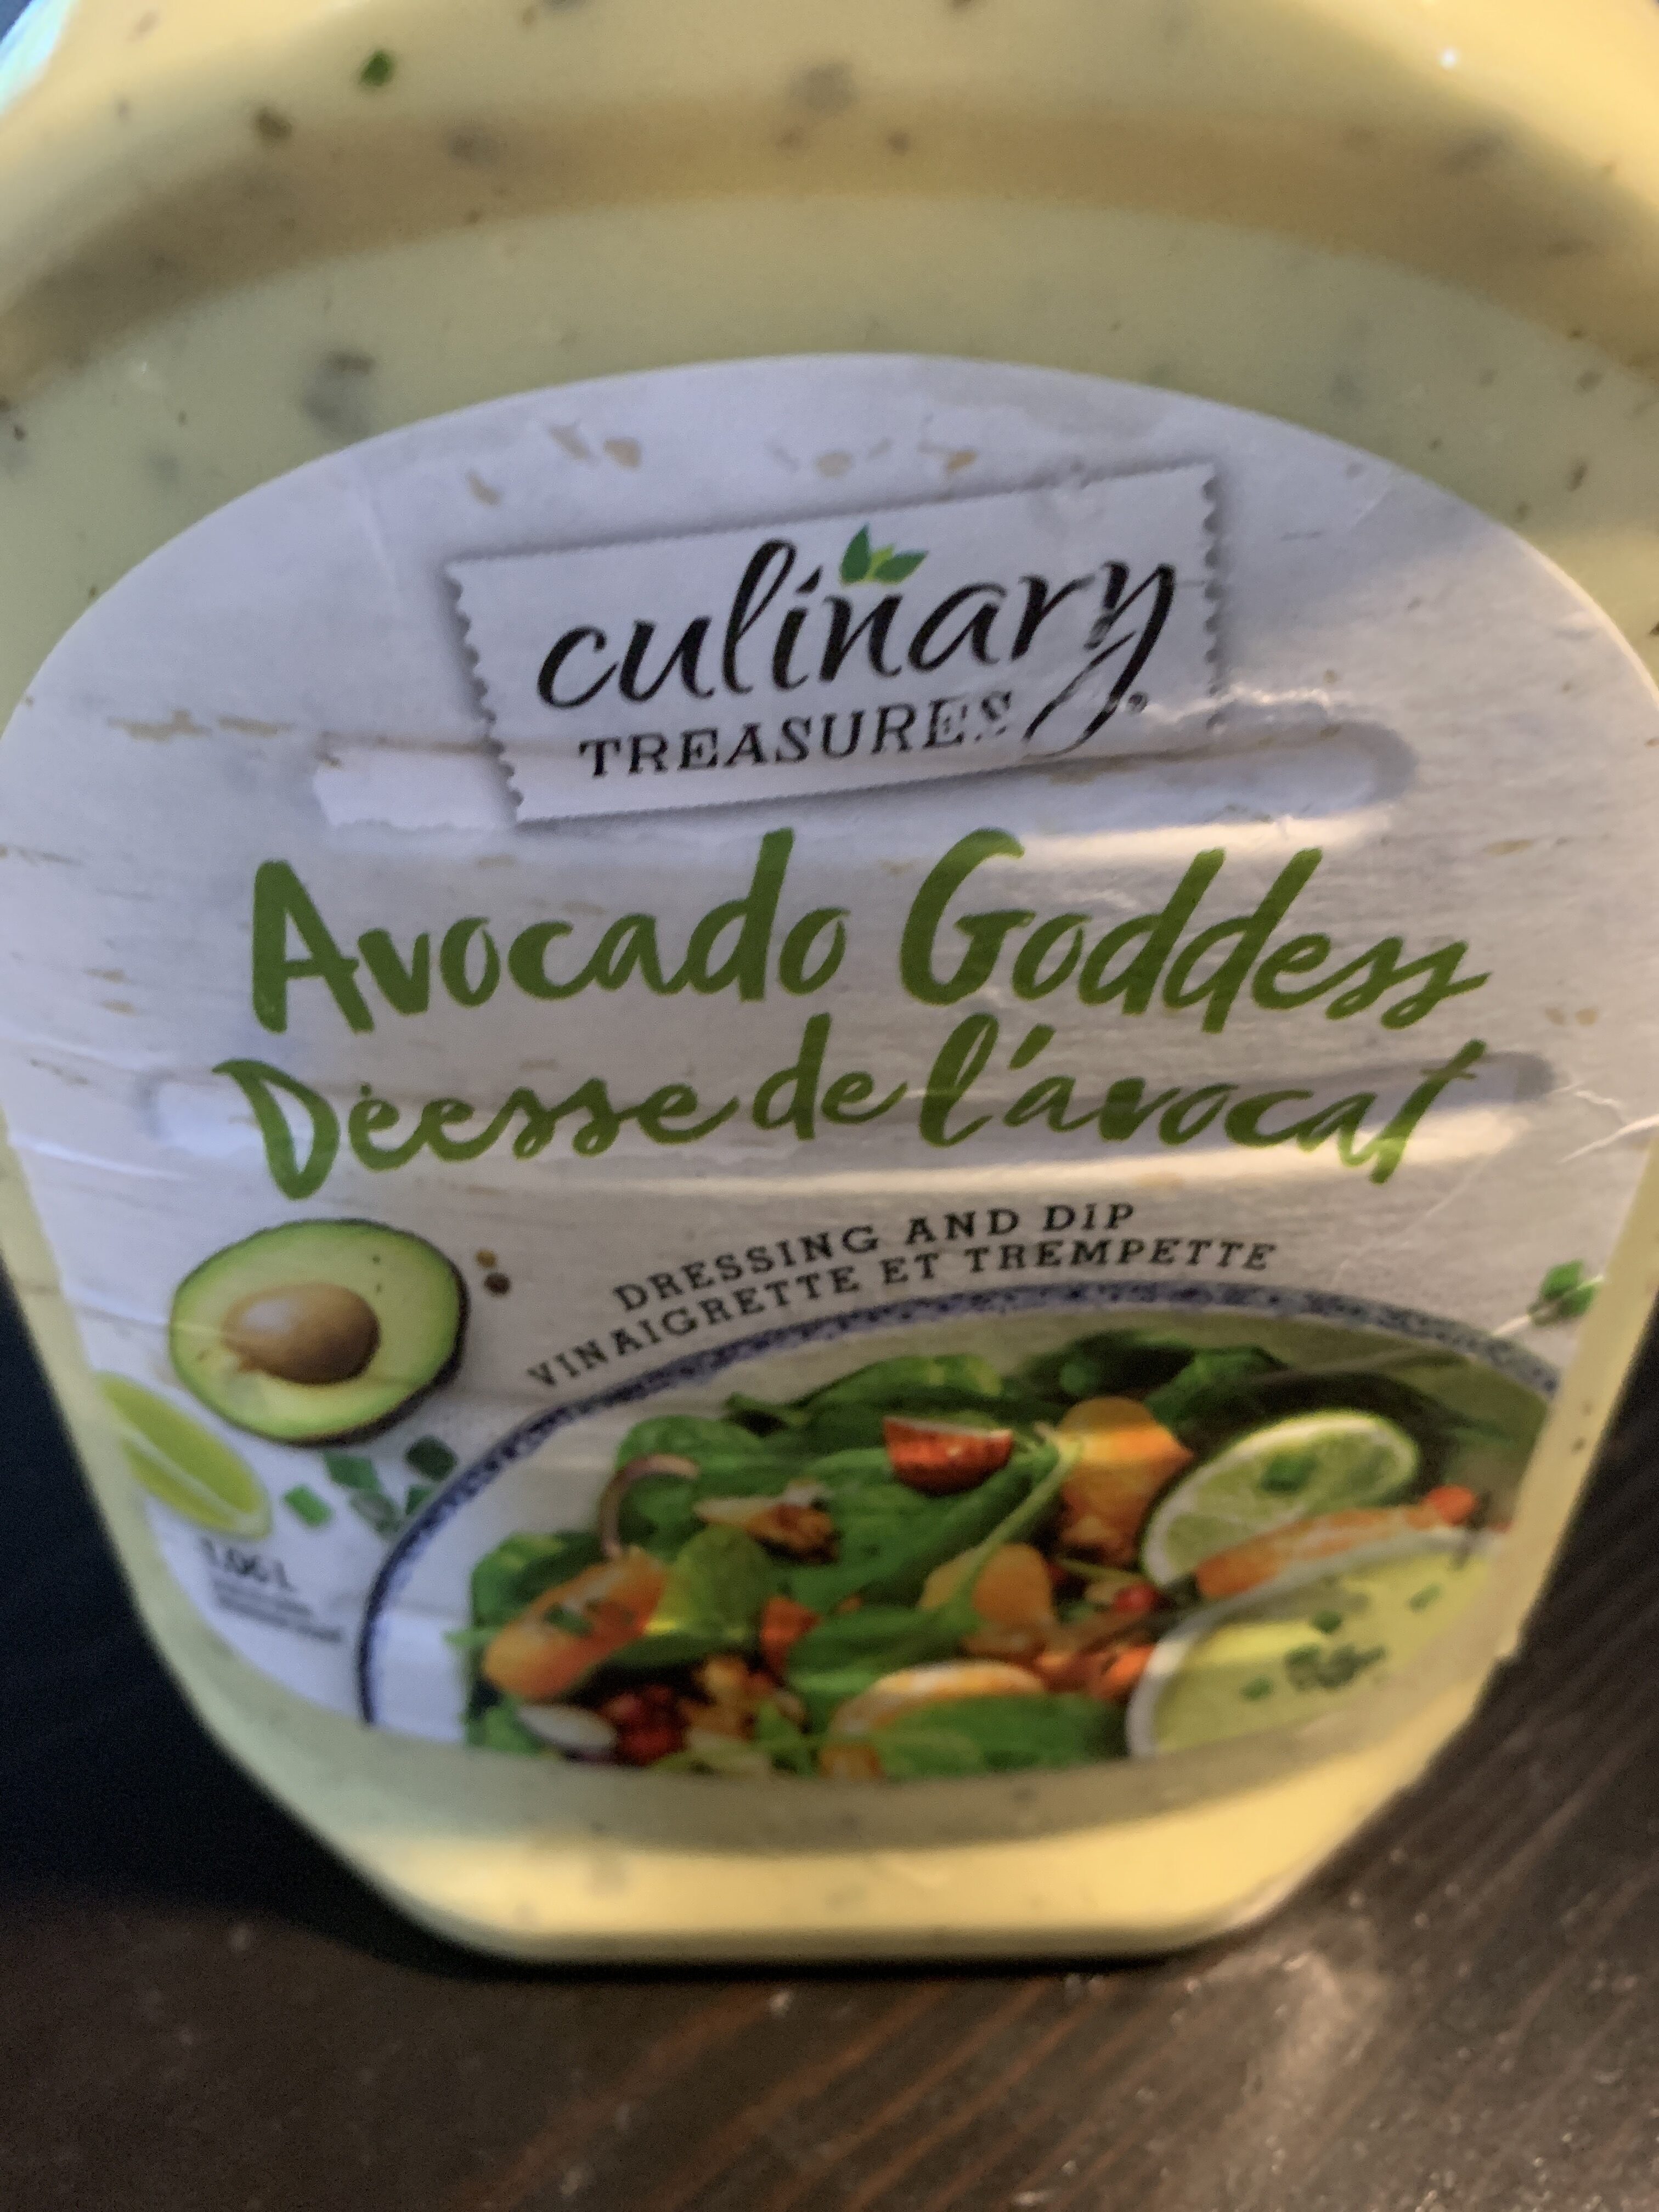 Avocado Goddess - Produkt - en